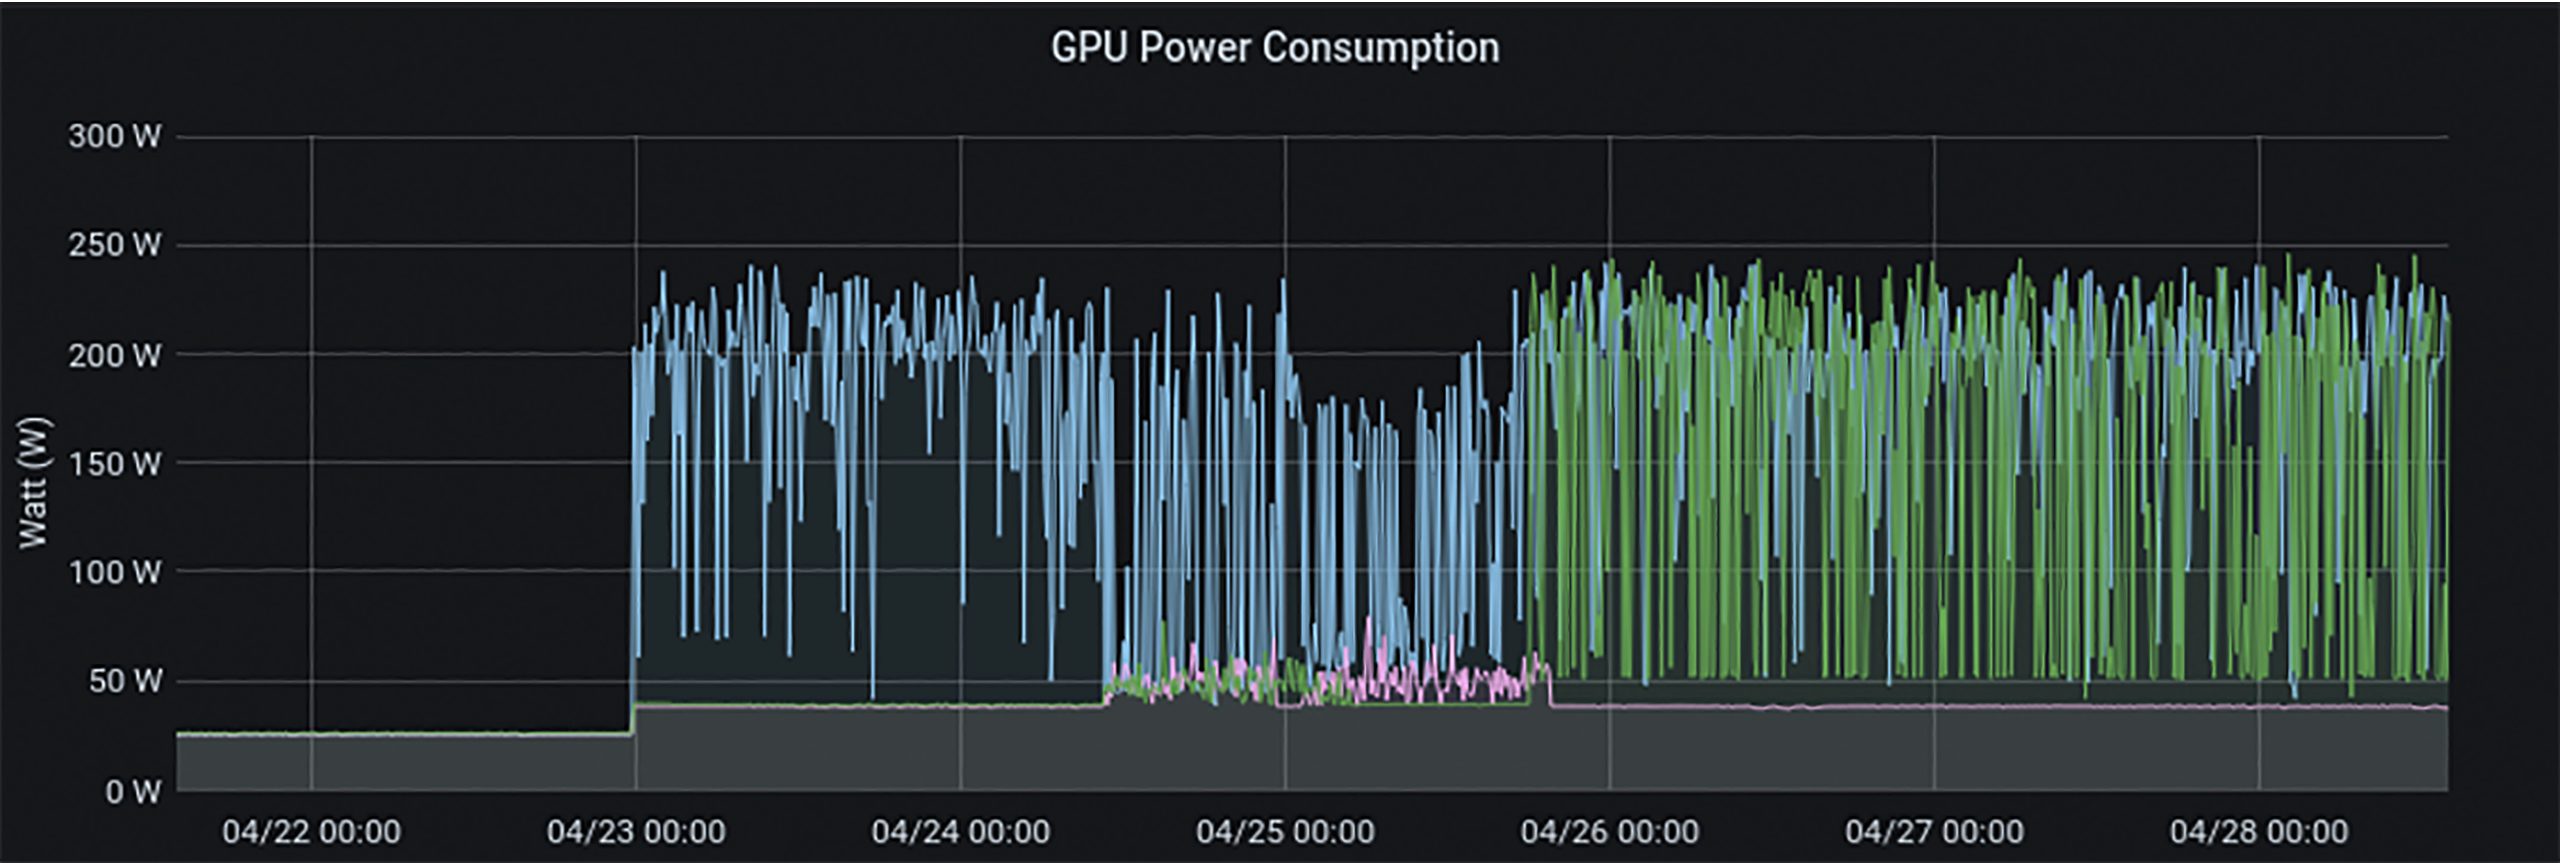 GPU Power Consumption